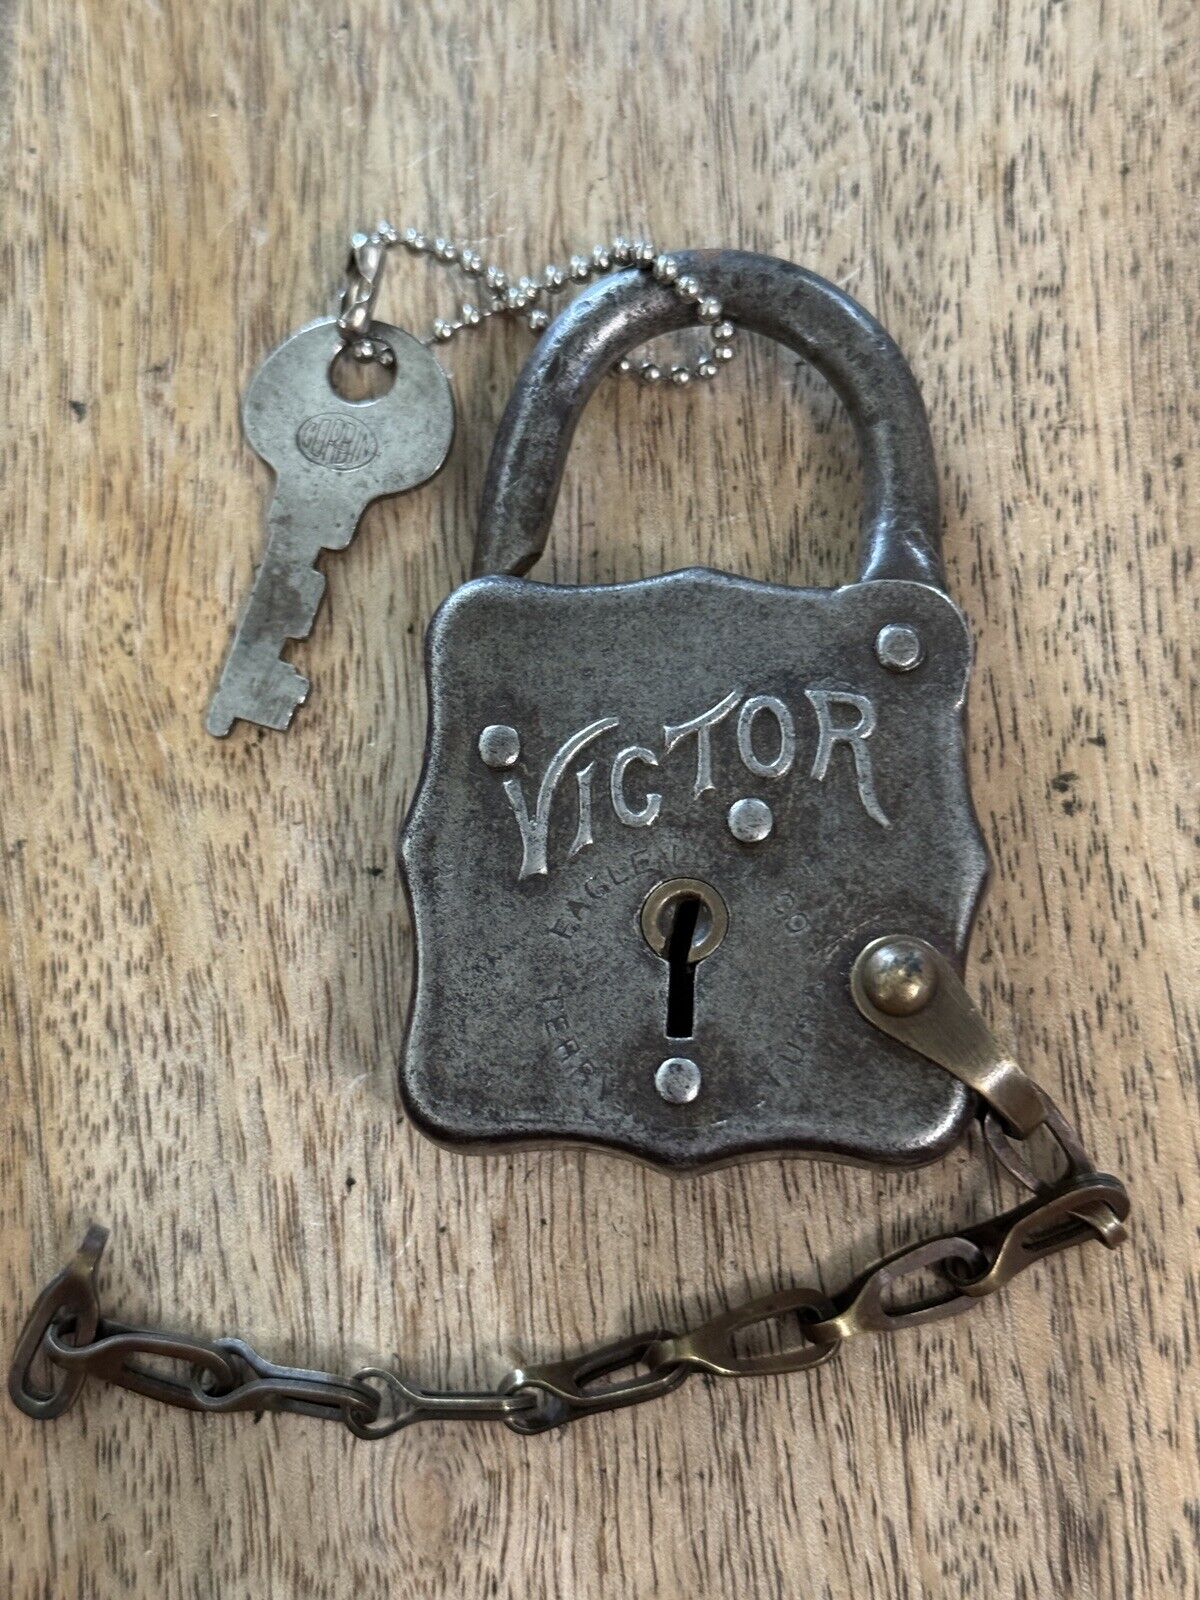 Vintage Old Eagle Victor Padlock With Key Lock